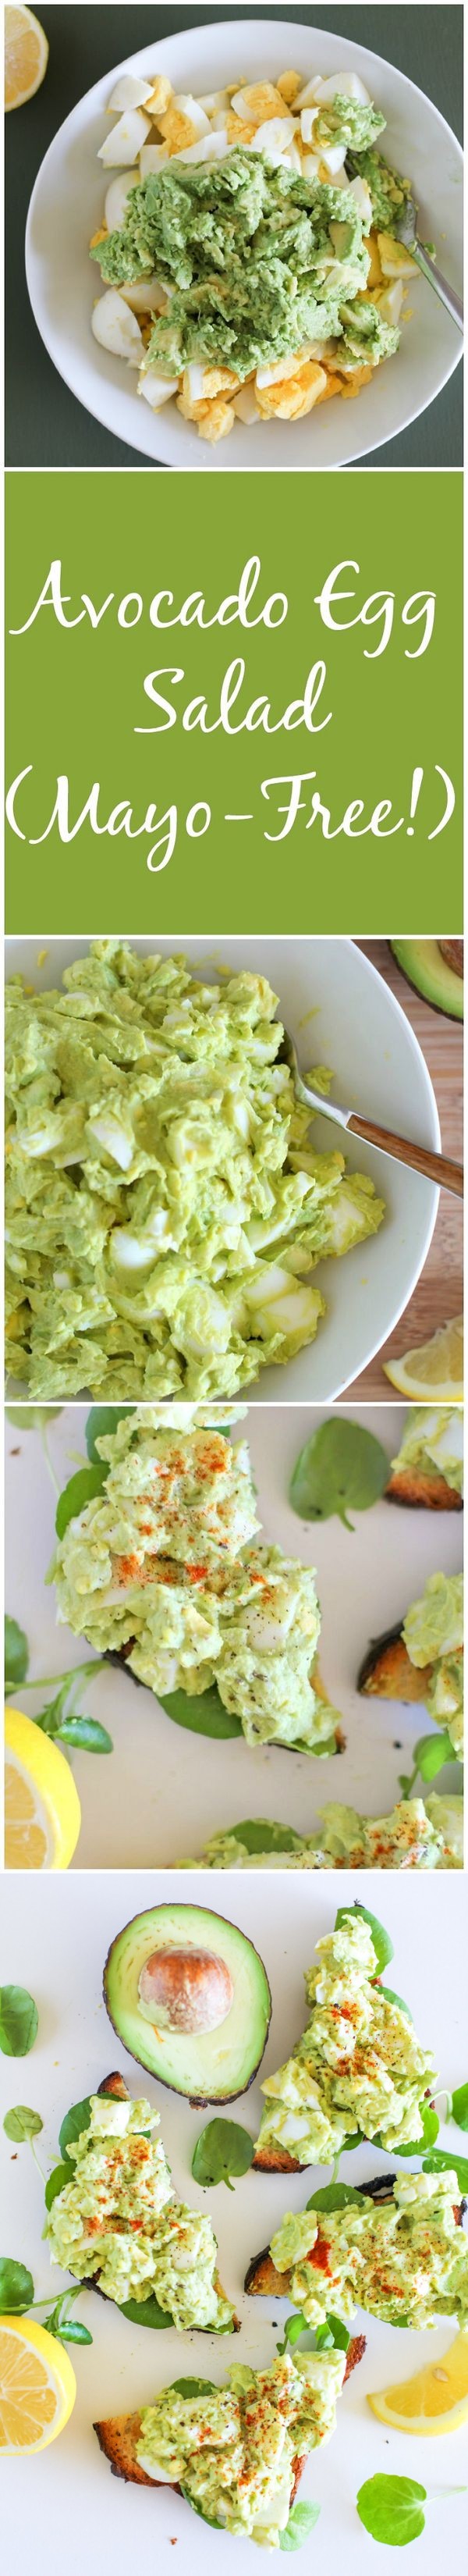 Avocado Egg Salad (mayo-free!